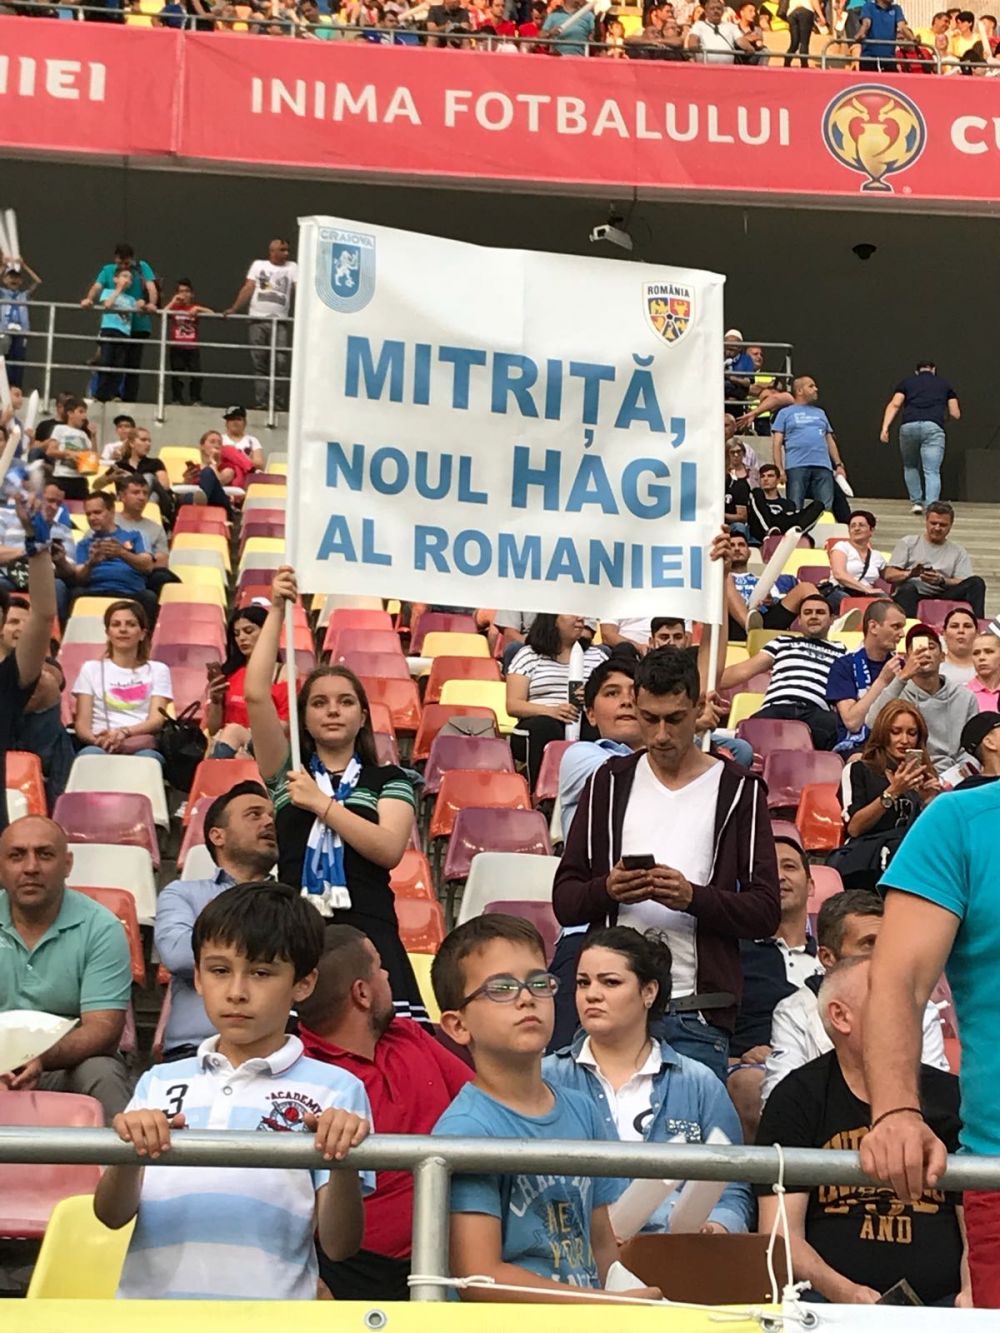 Mitrita, omul finalei: "De asta am venit la Craiova, sa castig un trofeu!" Reactia dupa banner-ul afisat in tribune: "S-a ajuns prea departe!" :)_1